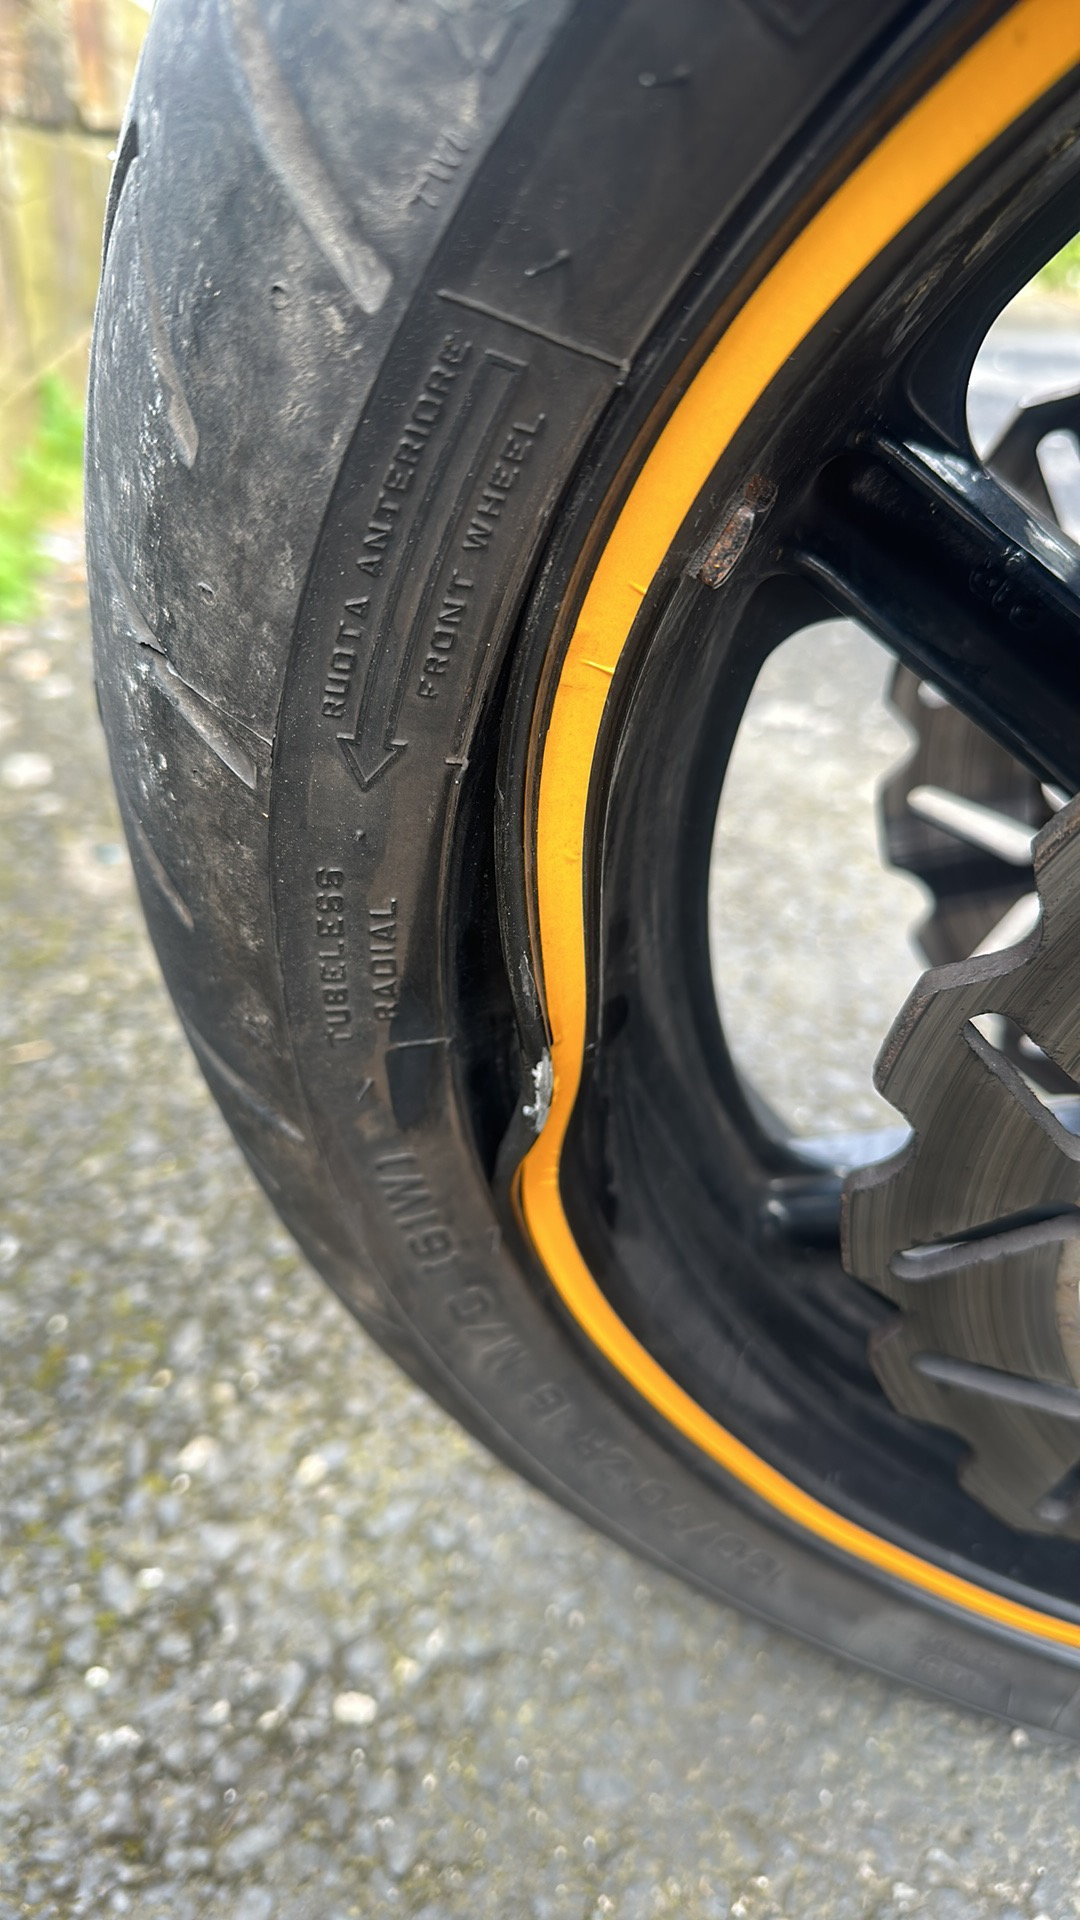 17 inch front wheel - CBR Forum - Enthusiast forums for Honda CBR